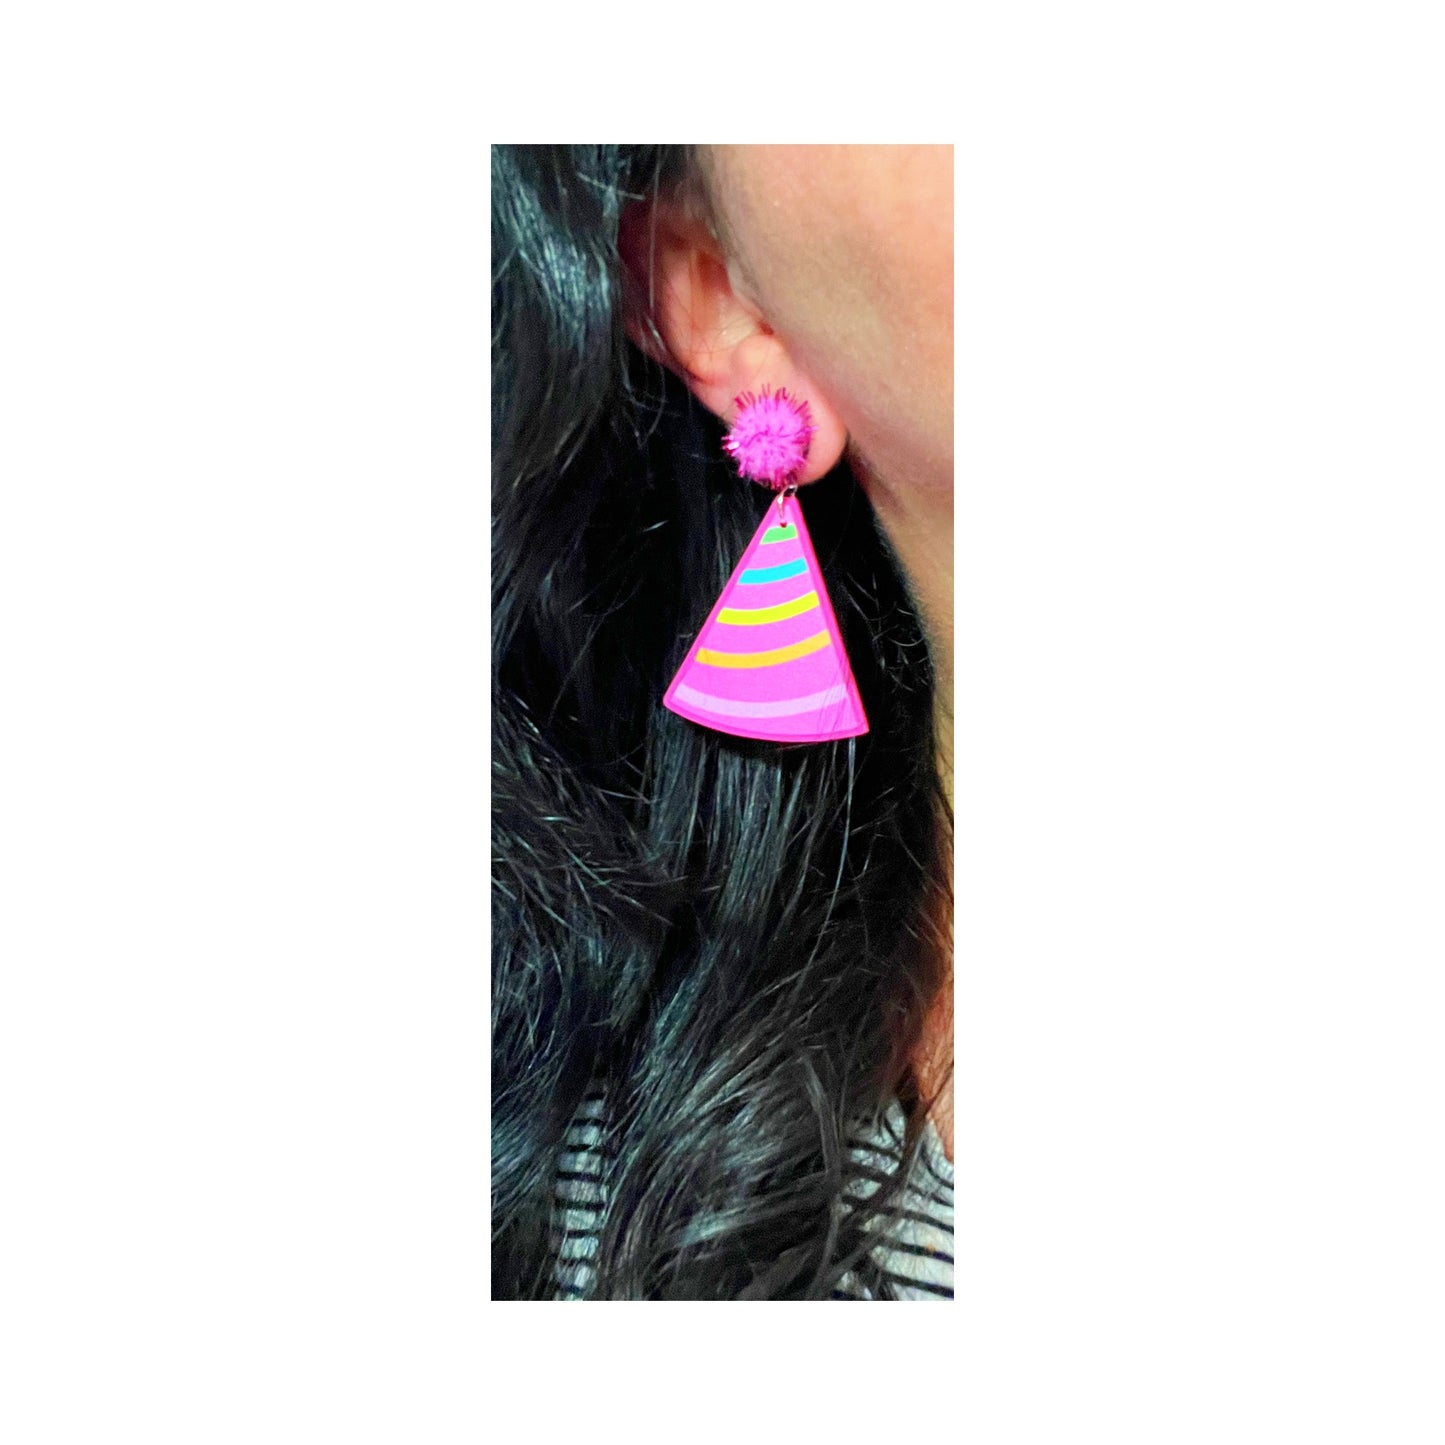 Pink Striped Pom Pom Party Hat Acrylic Drop Earrings